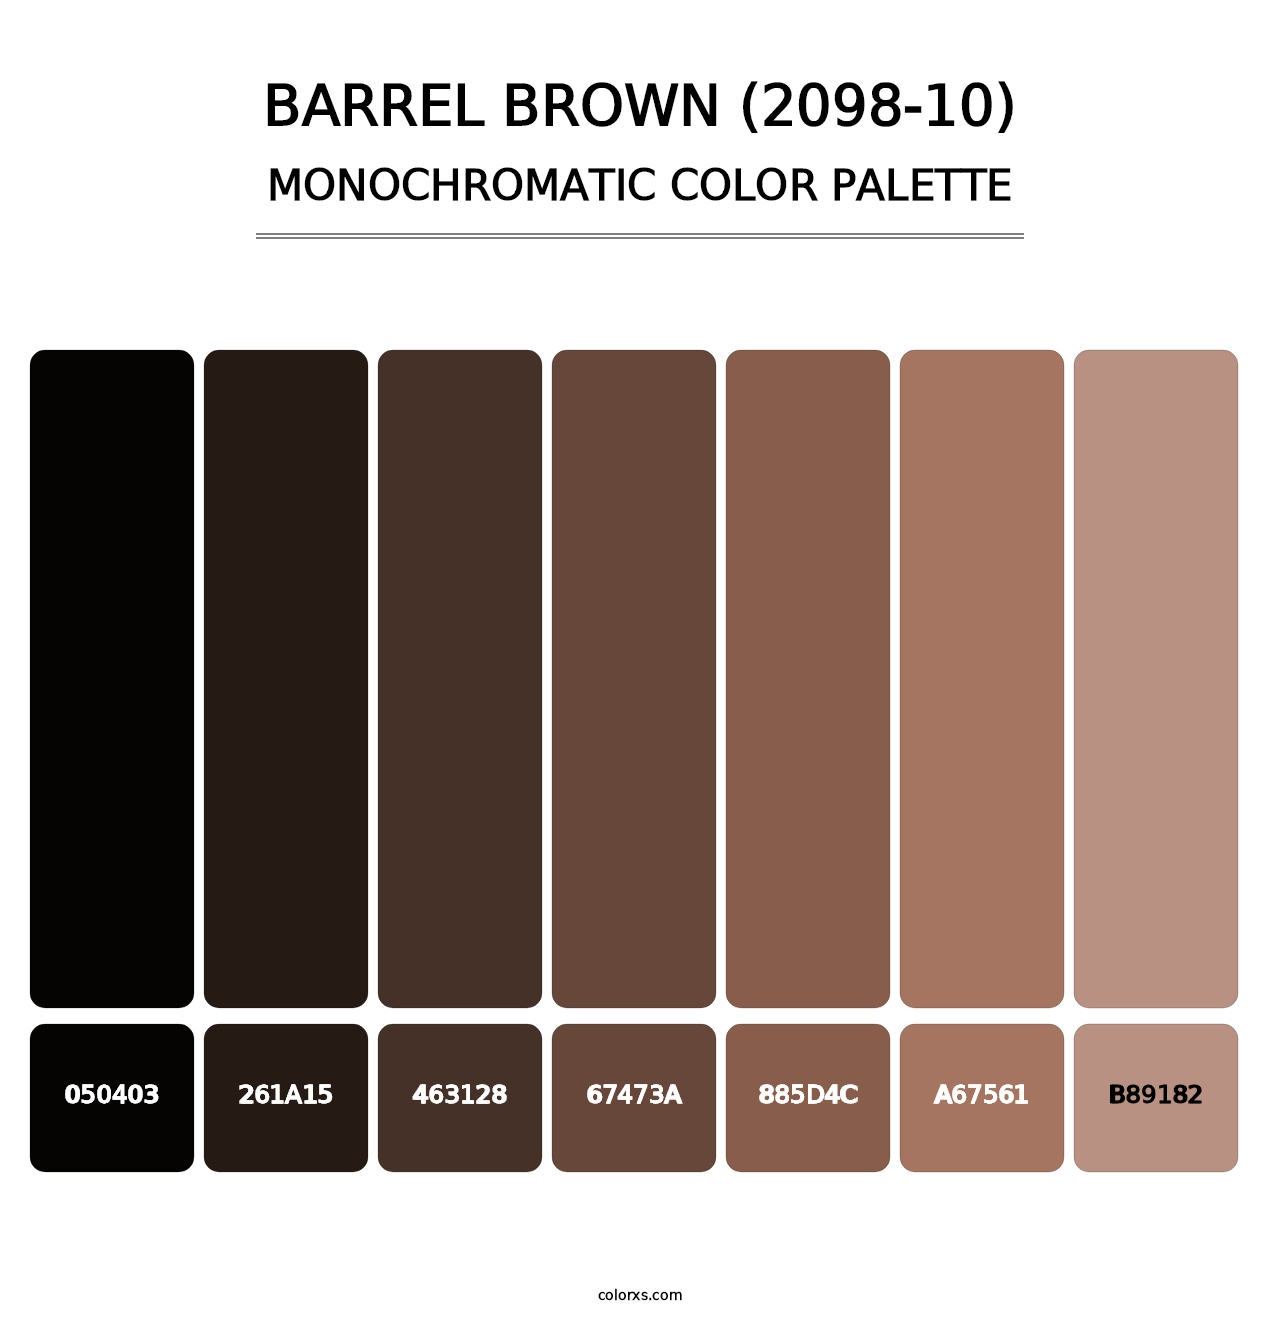 Barrel Brown (2098-10) - Monochromatic Color Palette